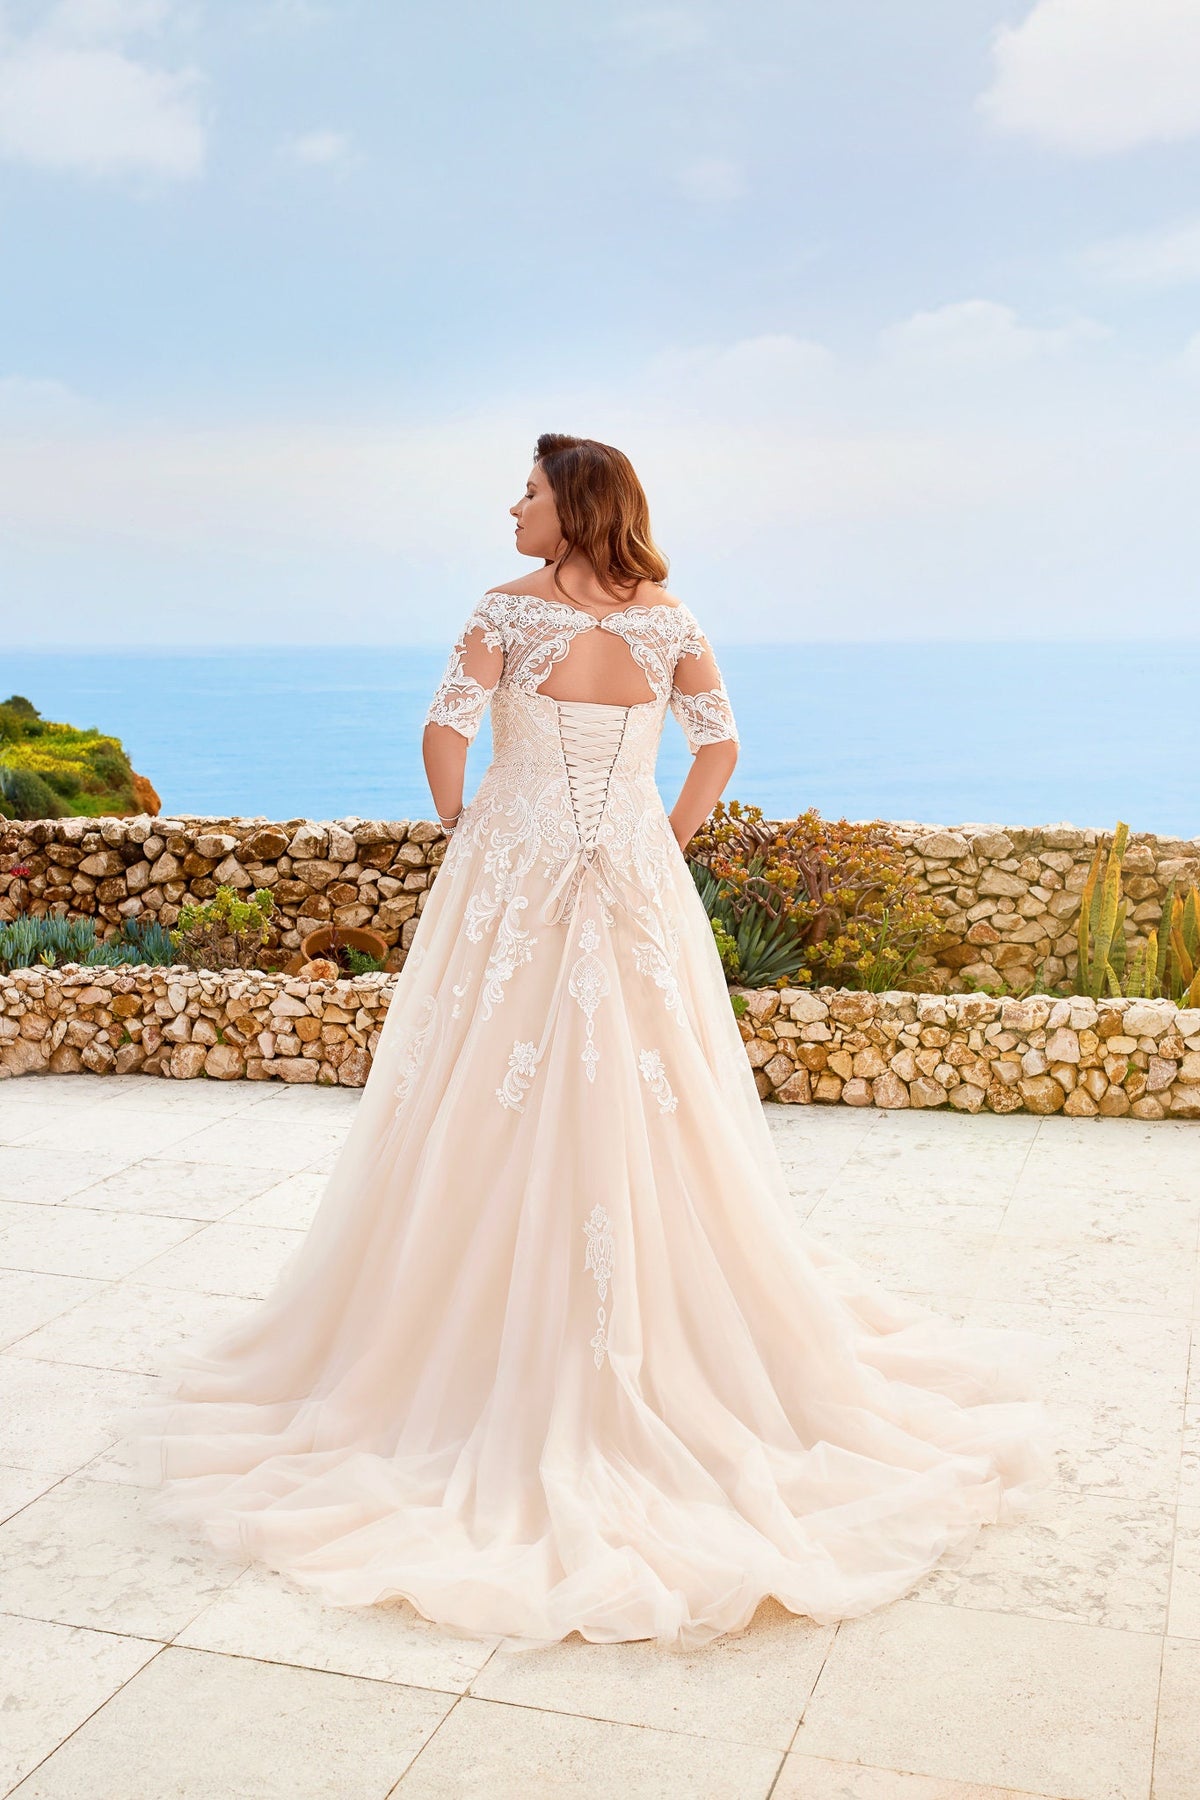 Classic Lace Bodice Short Sleeve Off The Shoulder Neckline Aline Wedding Dress Bridal Gown Ivory Blush Lace Up Corset Romantic Design